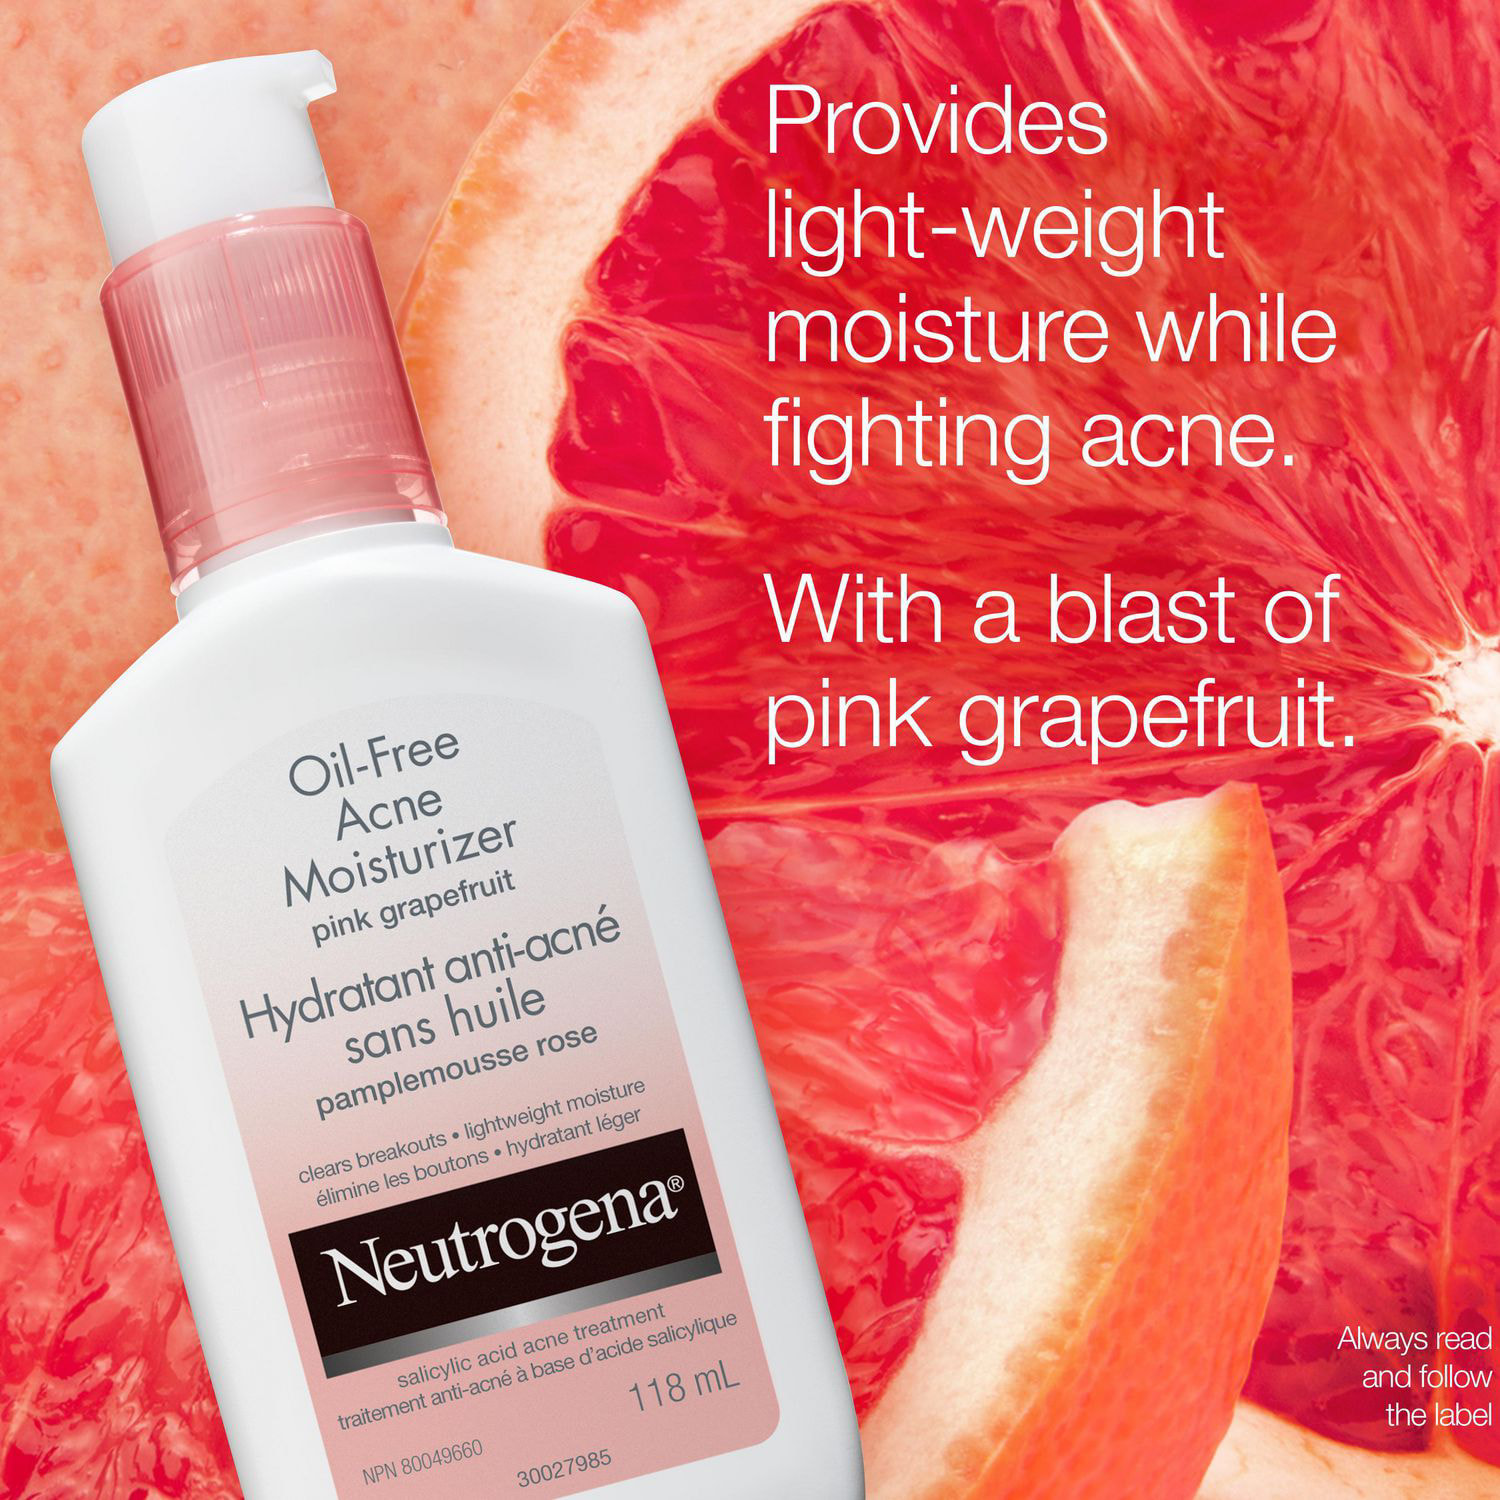 Neutrogena Oil Free Acne Moisturizer, Pink Grapefruit Face